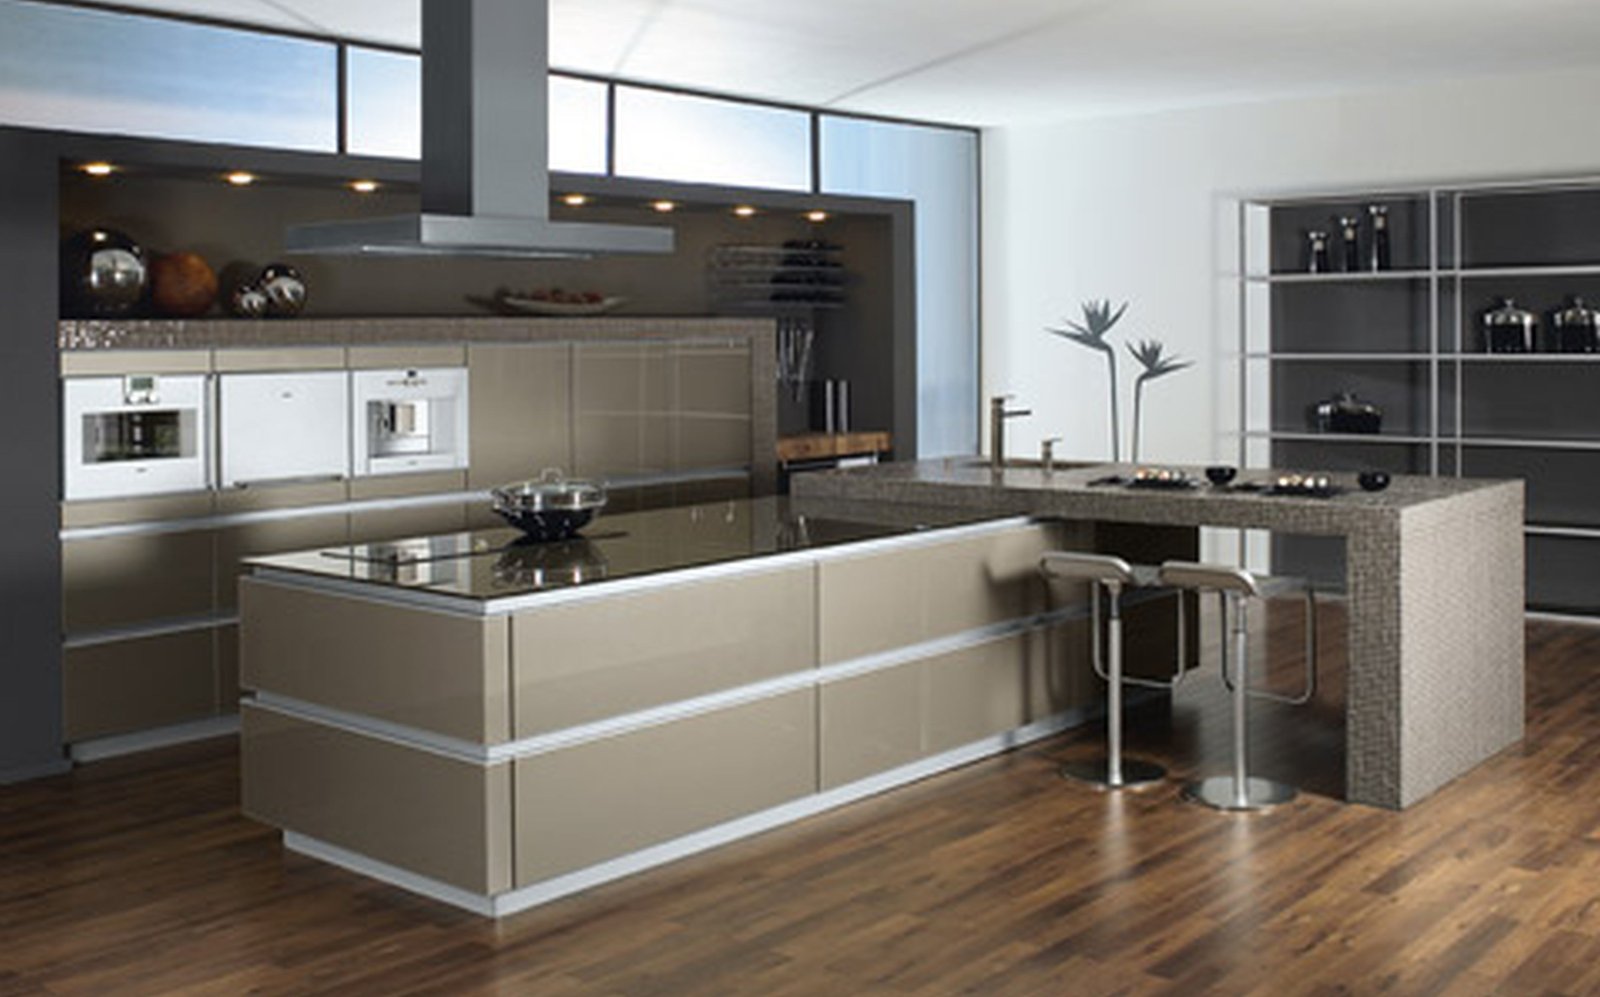 kitchen interior design inspiration dramatic